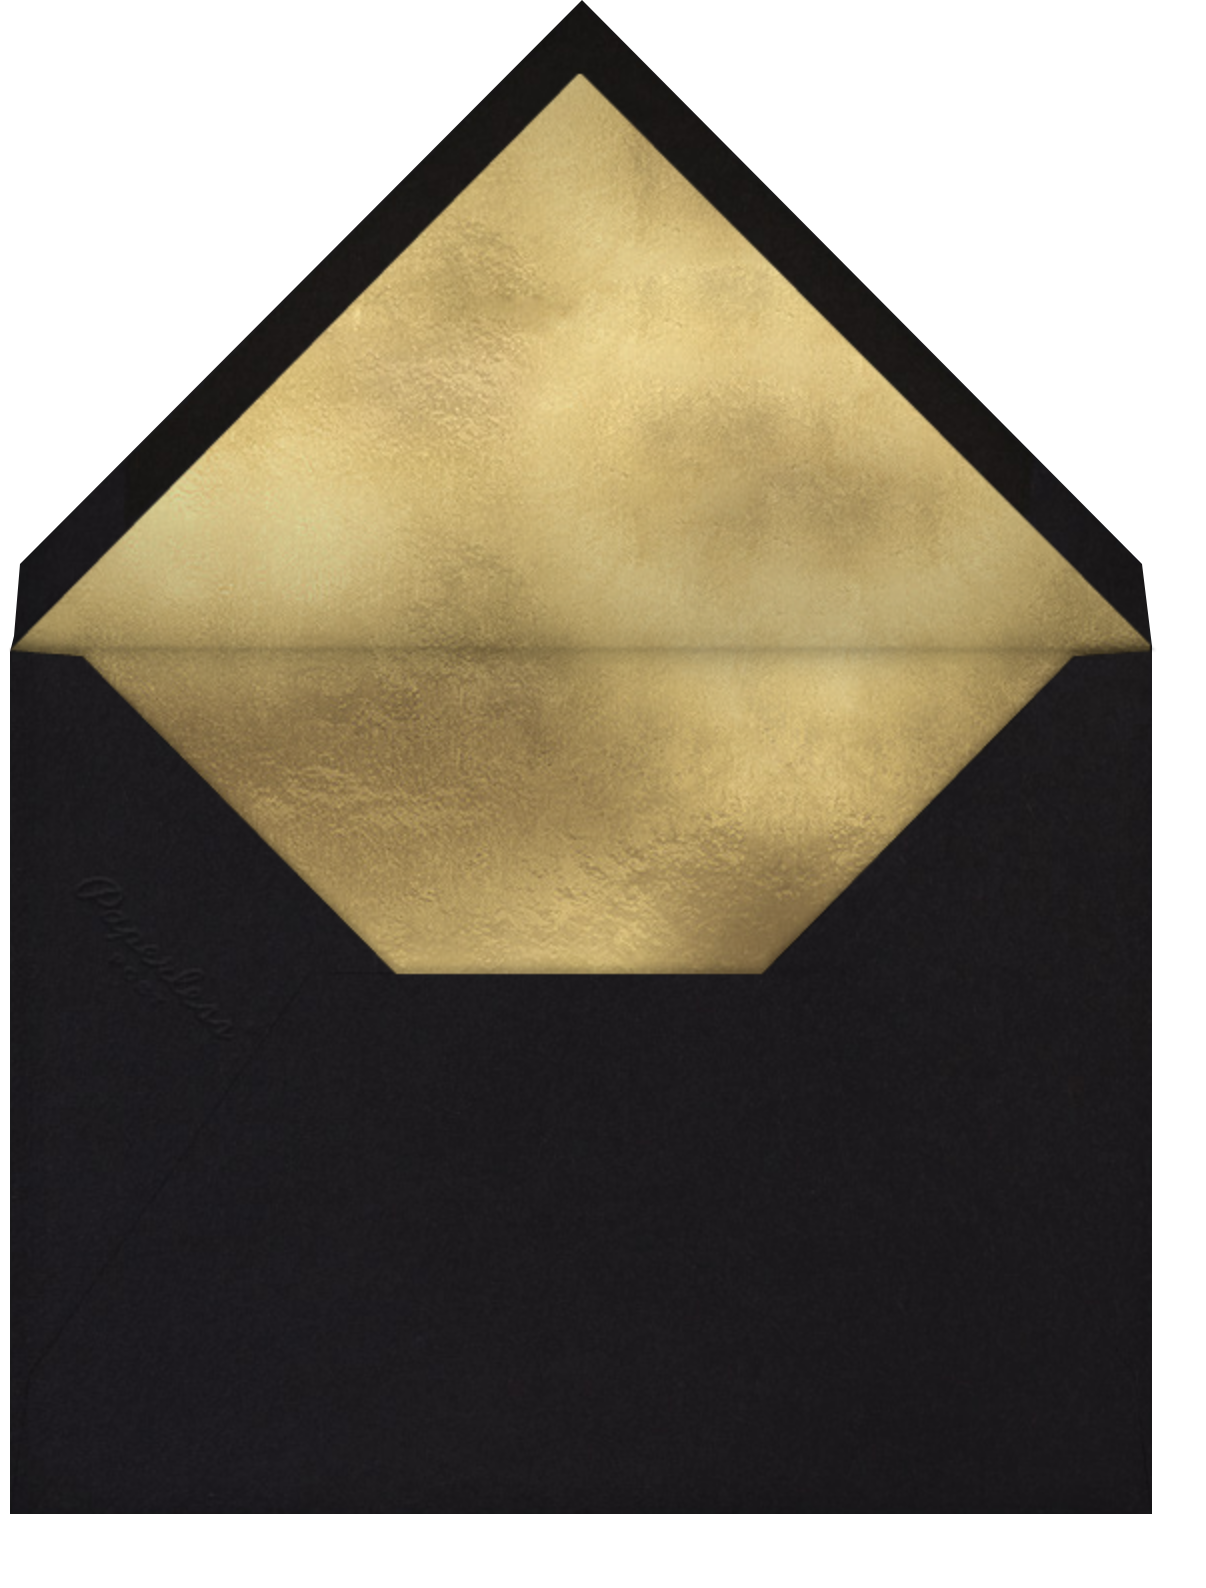 Streamer Shapes (Photo) - White/Gold - Paperless Post - Envelope